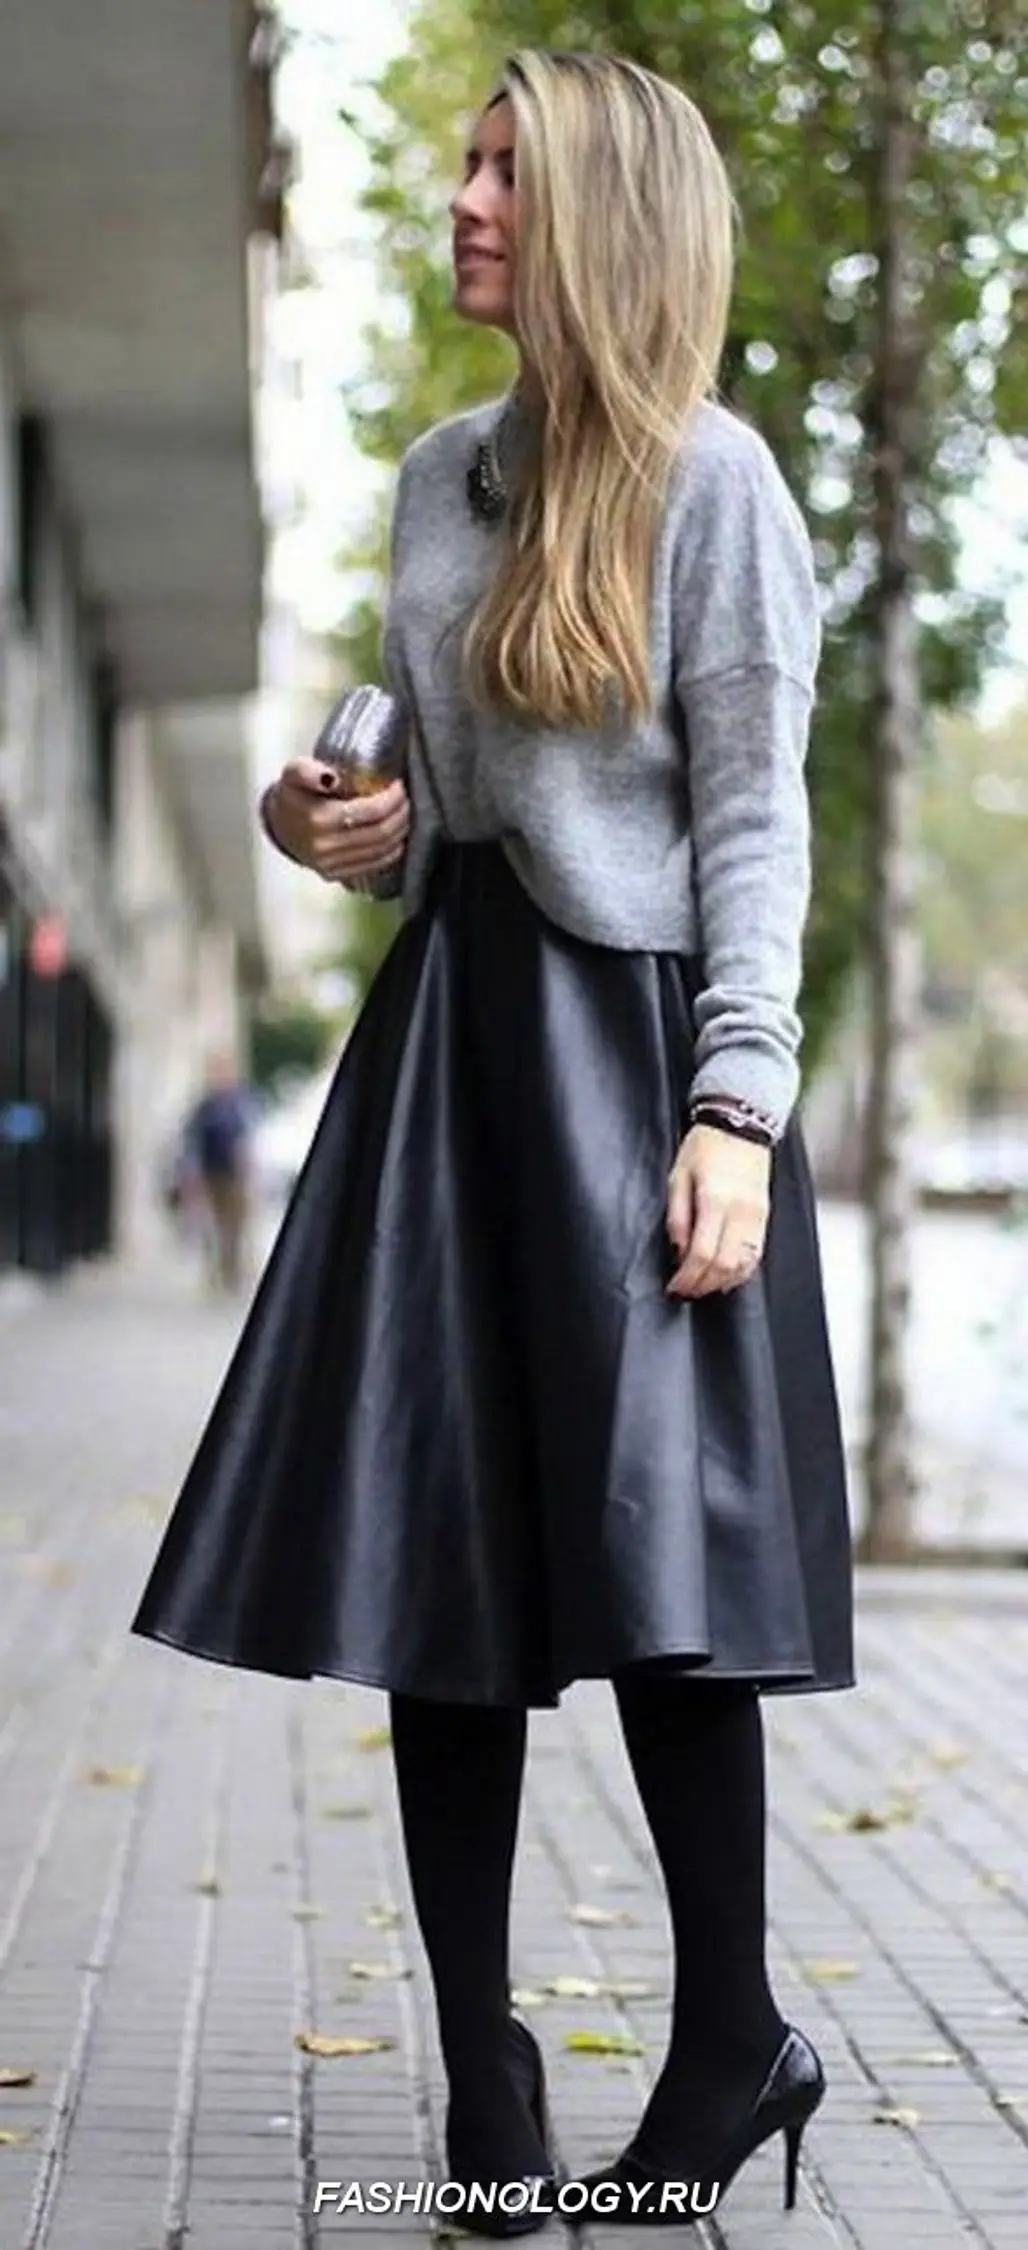 Classy Midi Skirt + Knit Top Combo